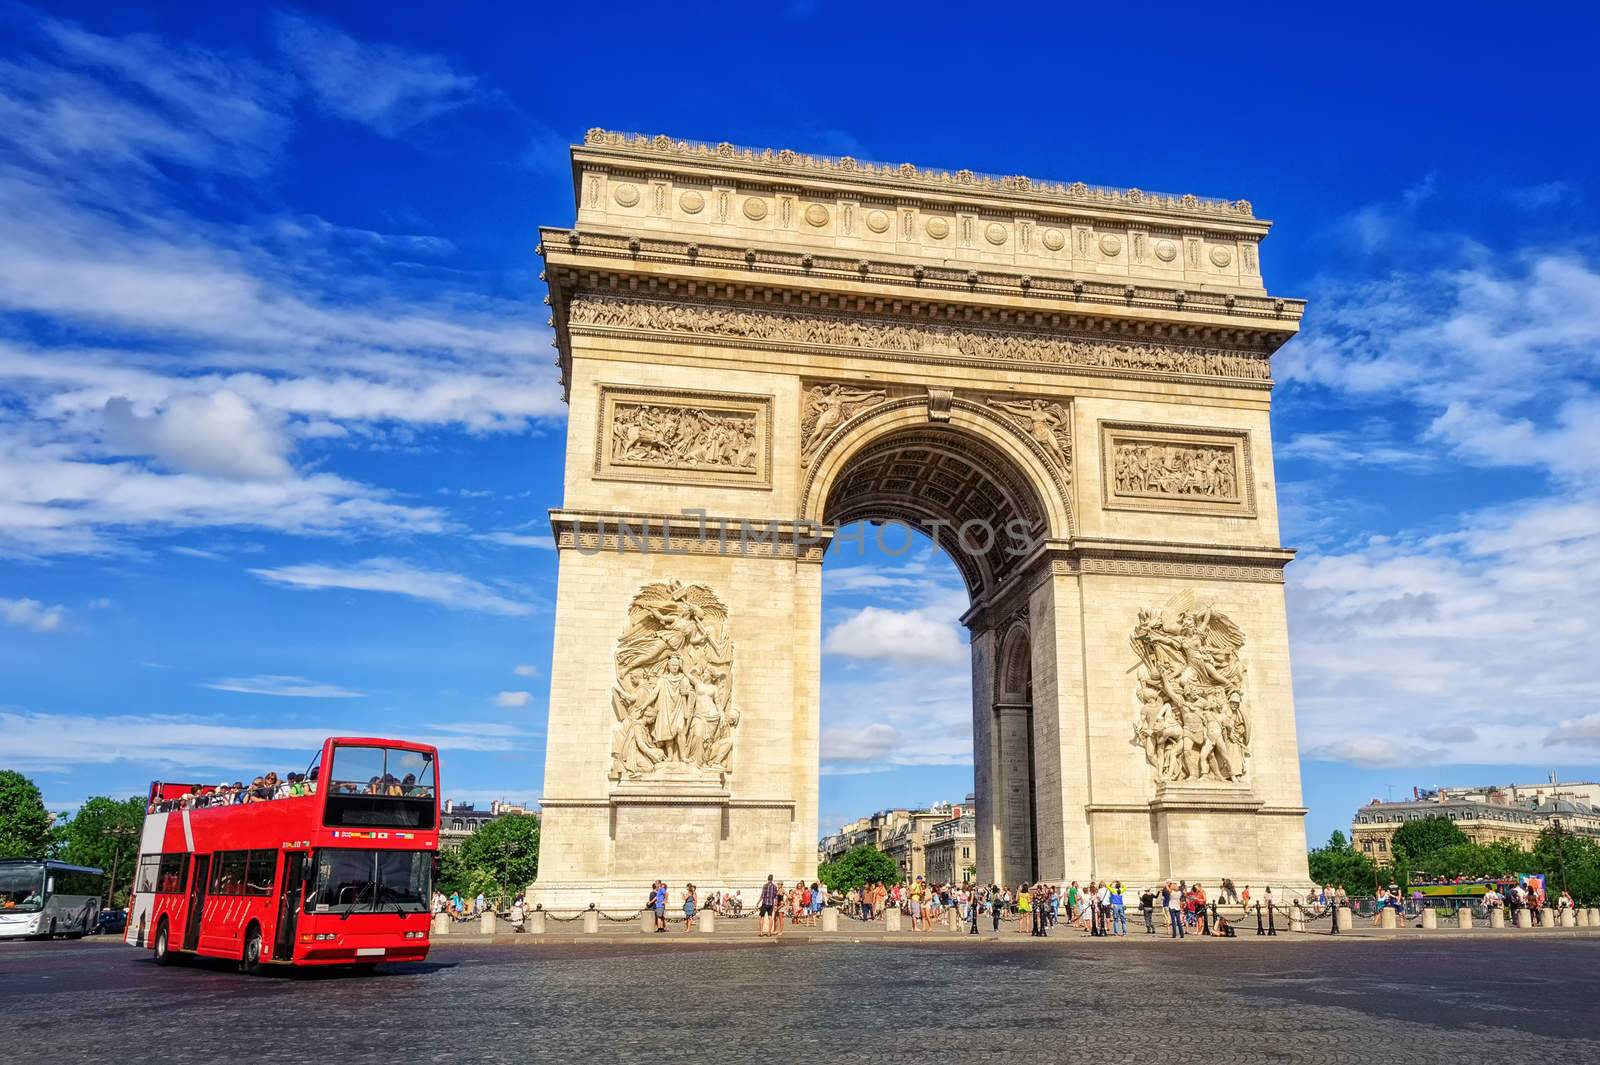 The Triumphal Arch, Paris, France by GlobePhotos